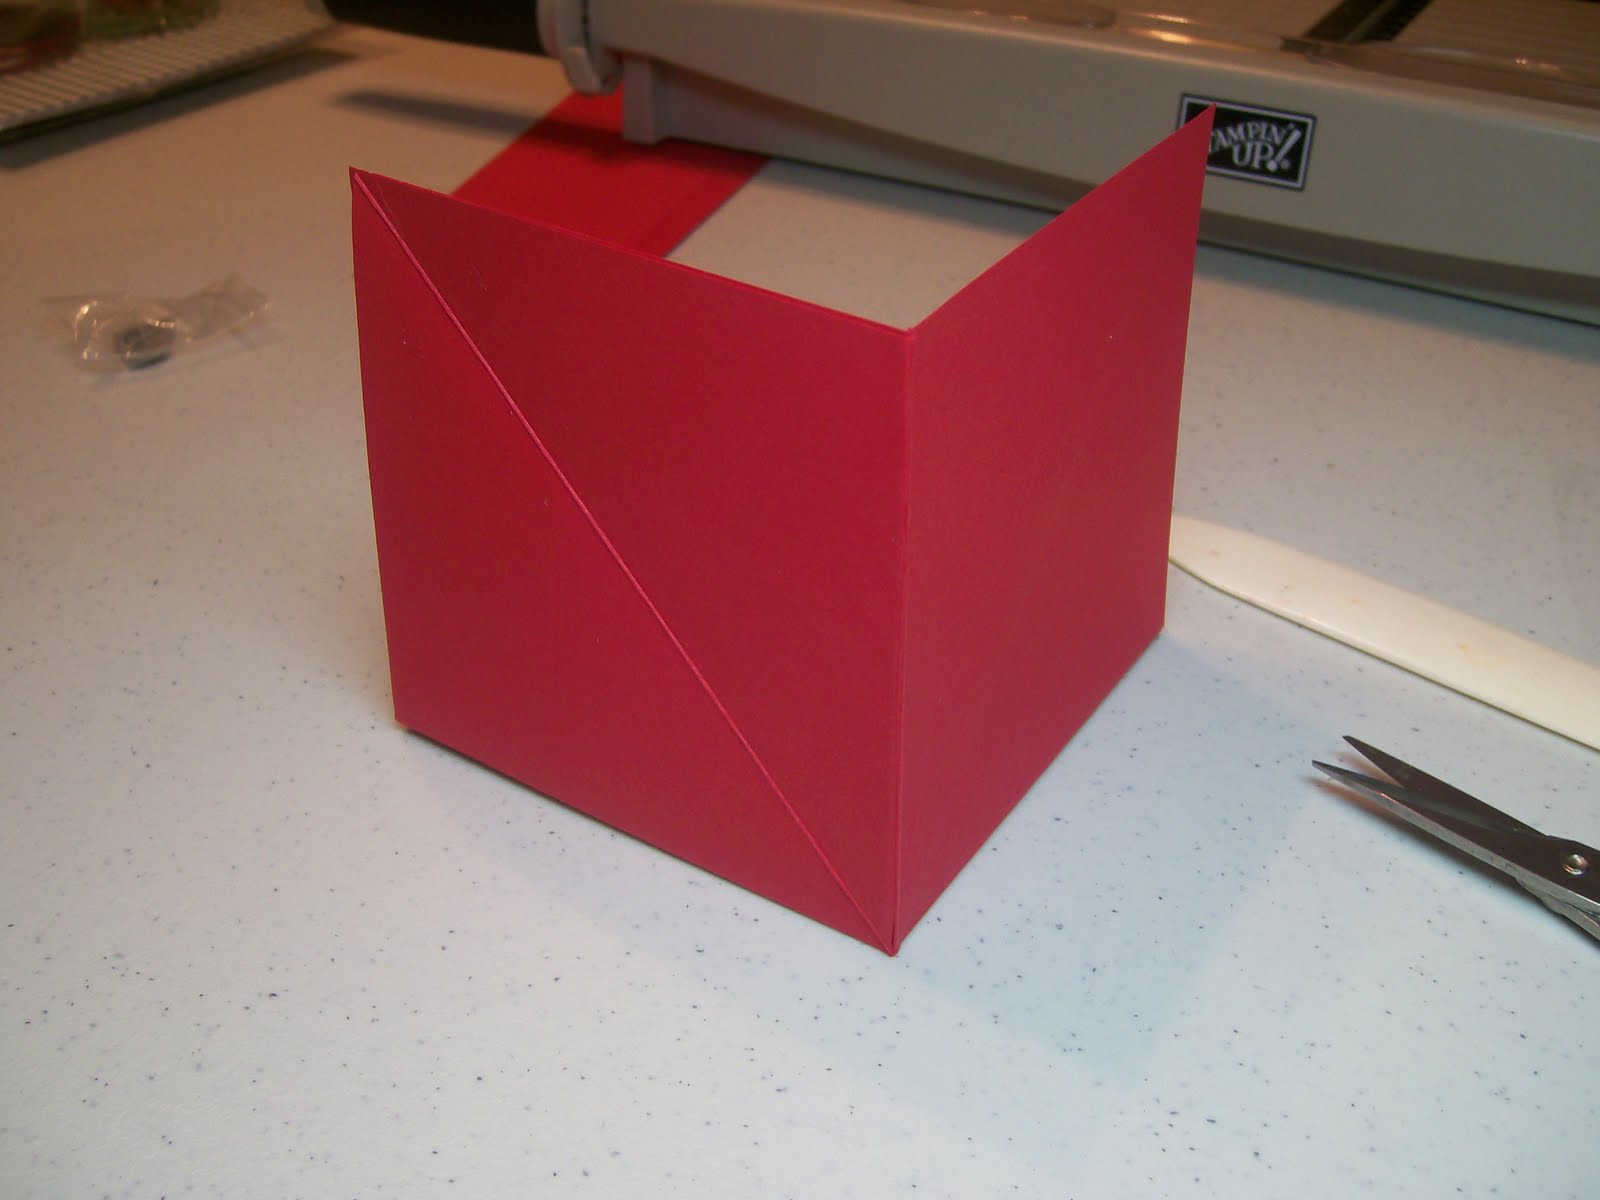 Tutorials: Cube Card Fold